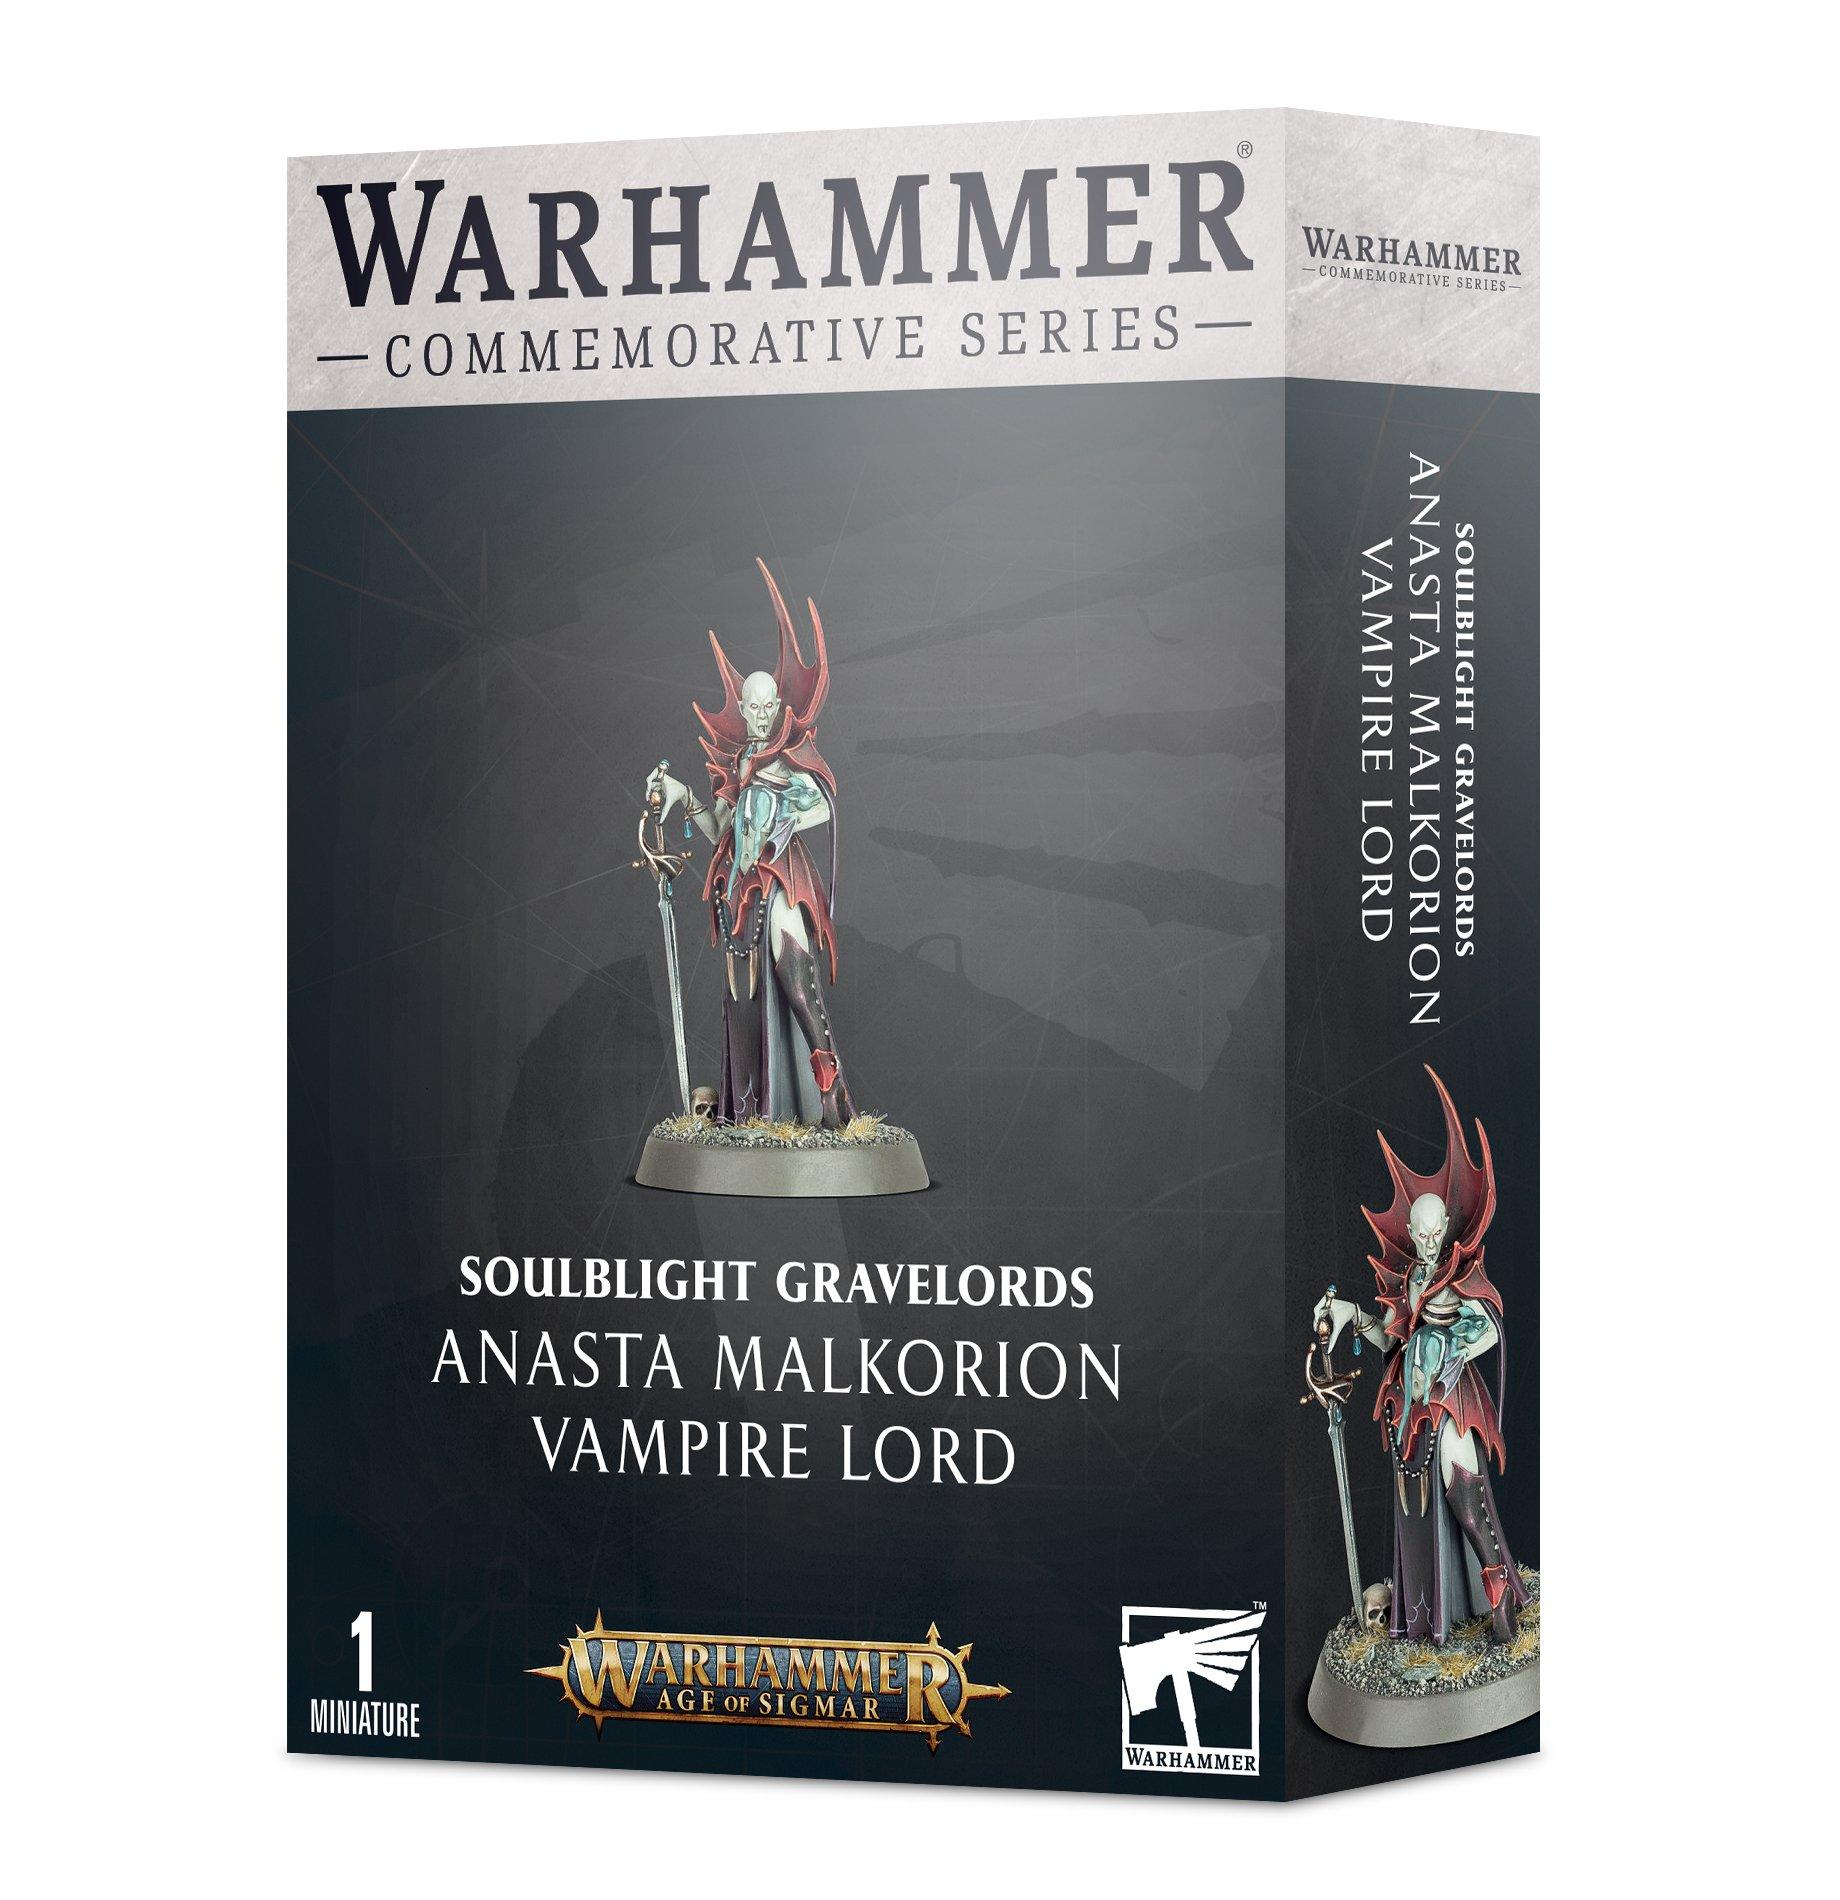 Warhammer: Commemorative Series - Soulblight Gravelords: Anasta Malkorion Vampire Lord